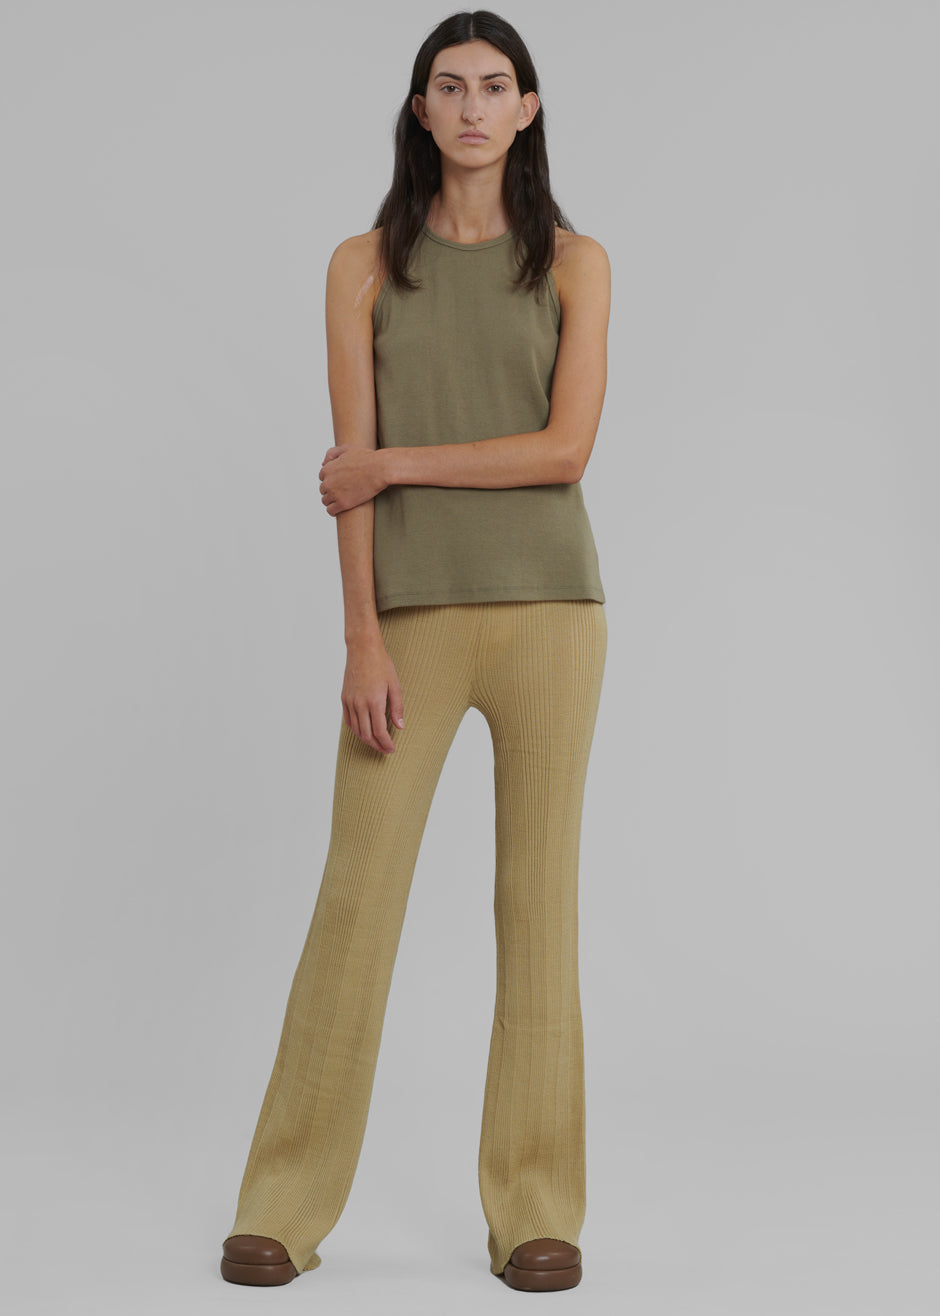 REMAIN Soleima Pants Refined Merino Wool - Sage Green - 7